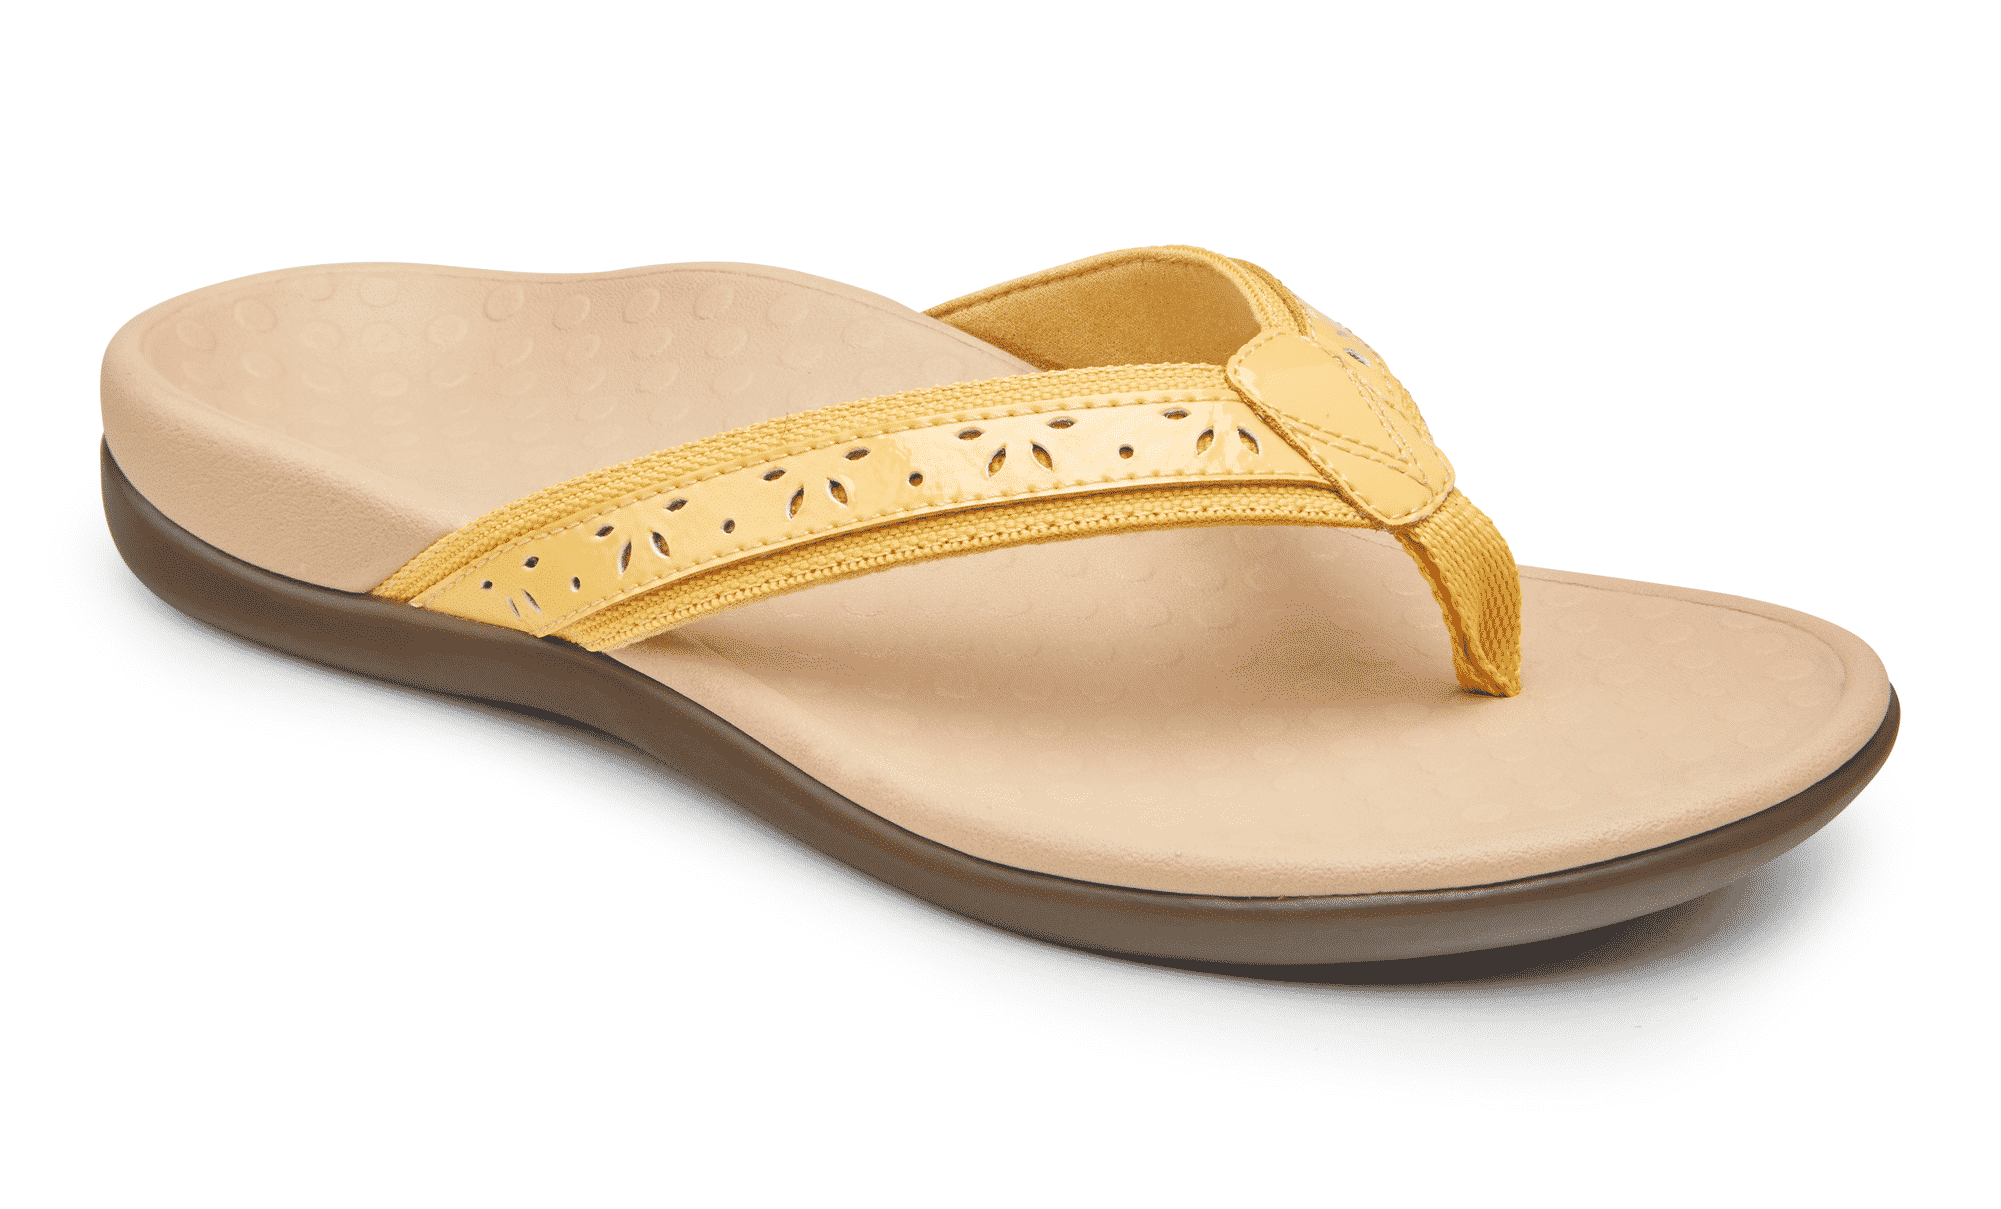 Sandals | The Bone Store | Vionic | Spenco | Orthotic Footwear